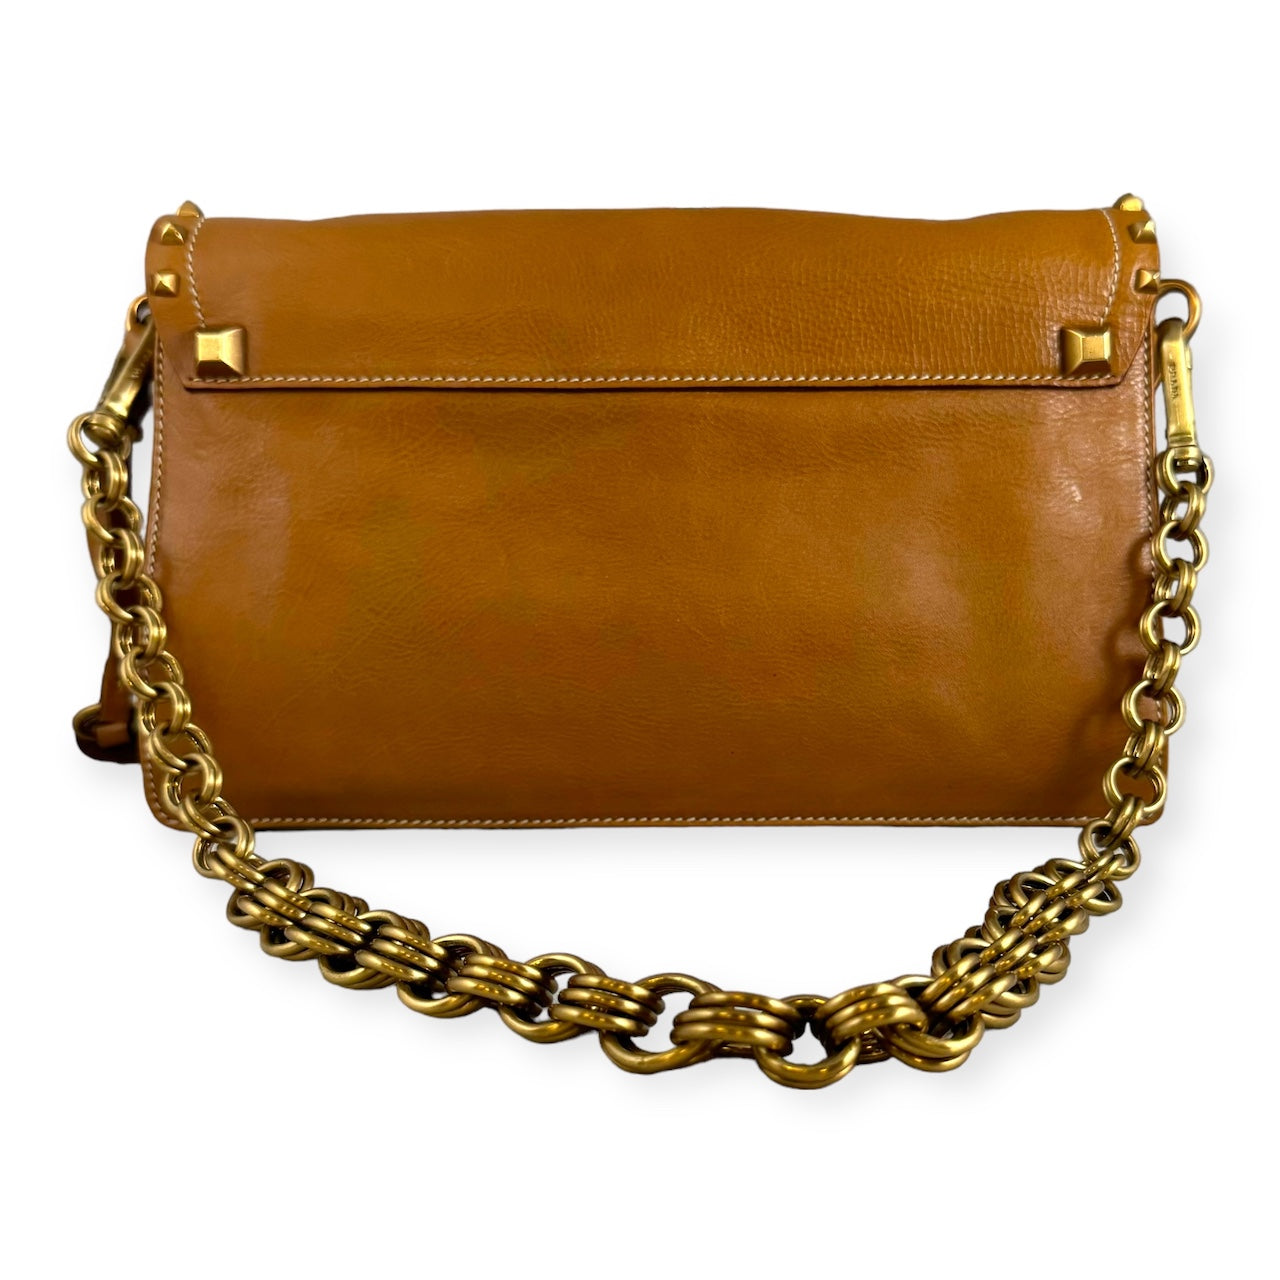 PRADA Studded Chain Shoulder Bag in Scotch